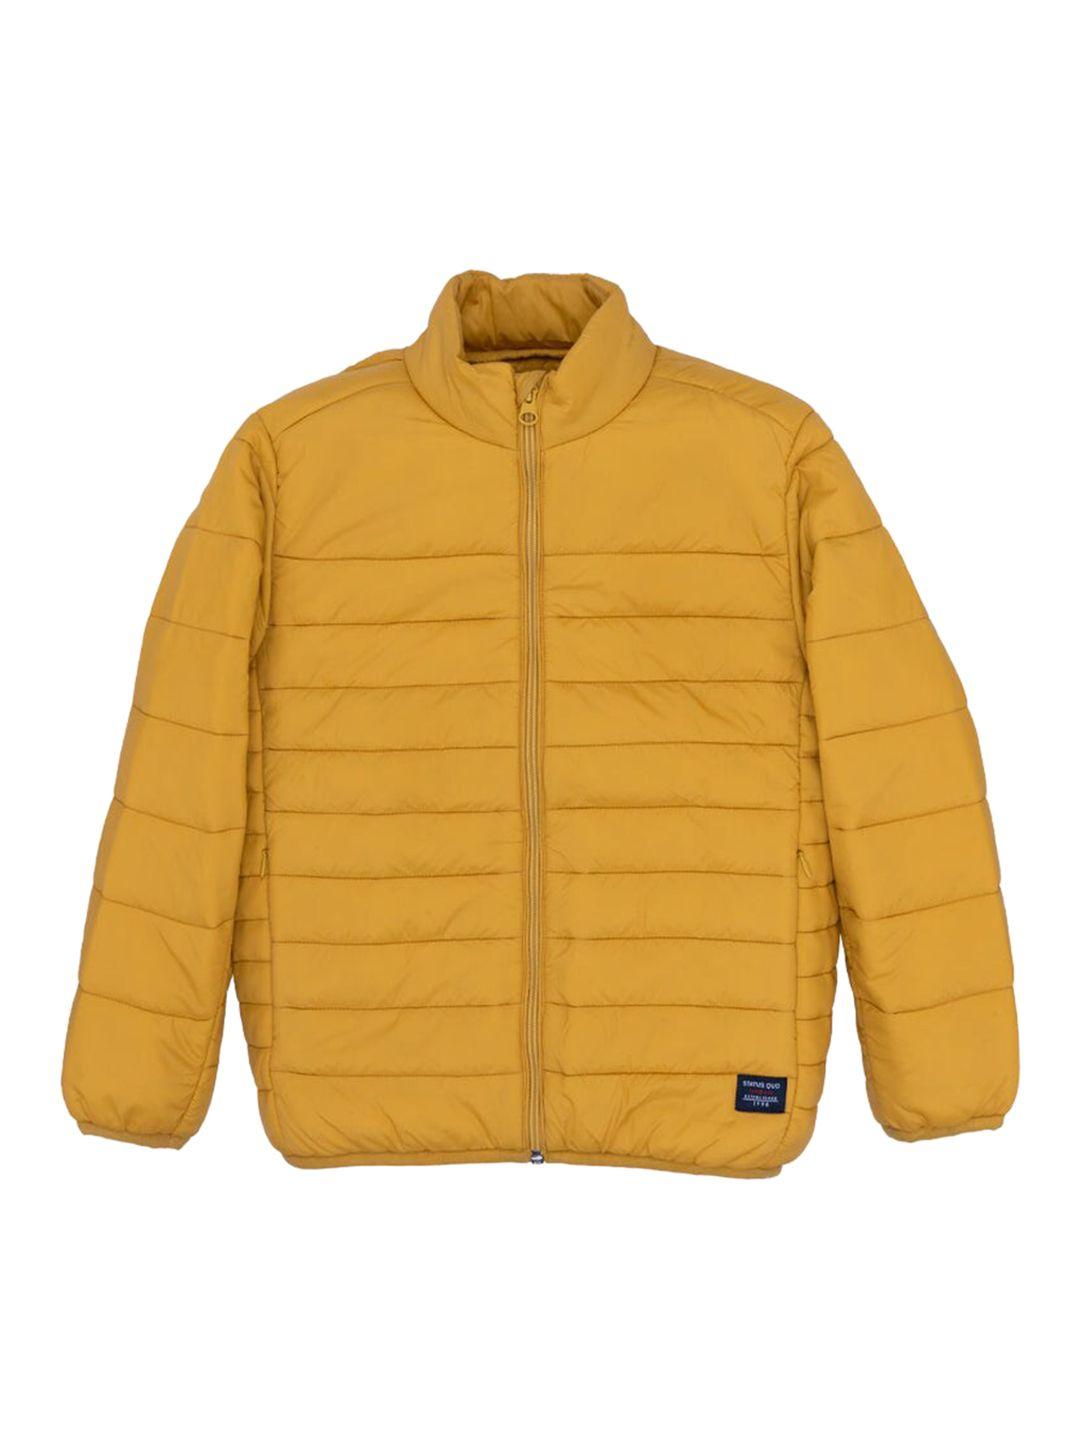 status quo boys mustard yellow mock collar puffer jacket